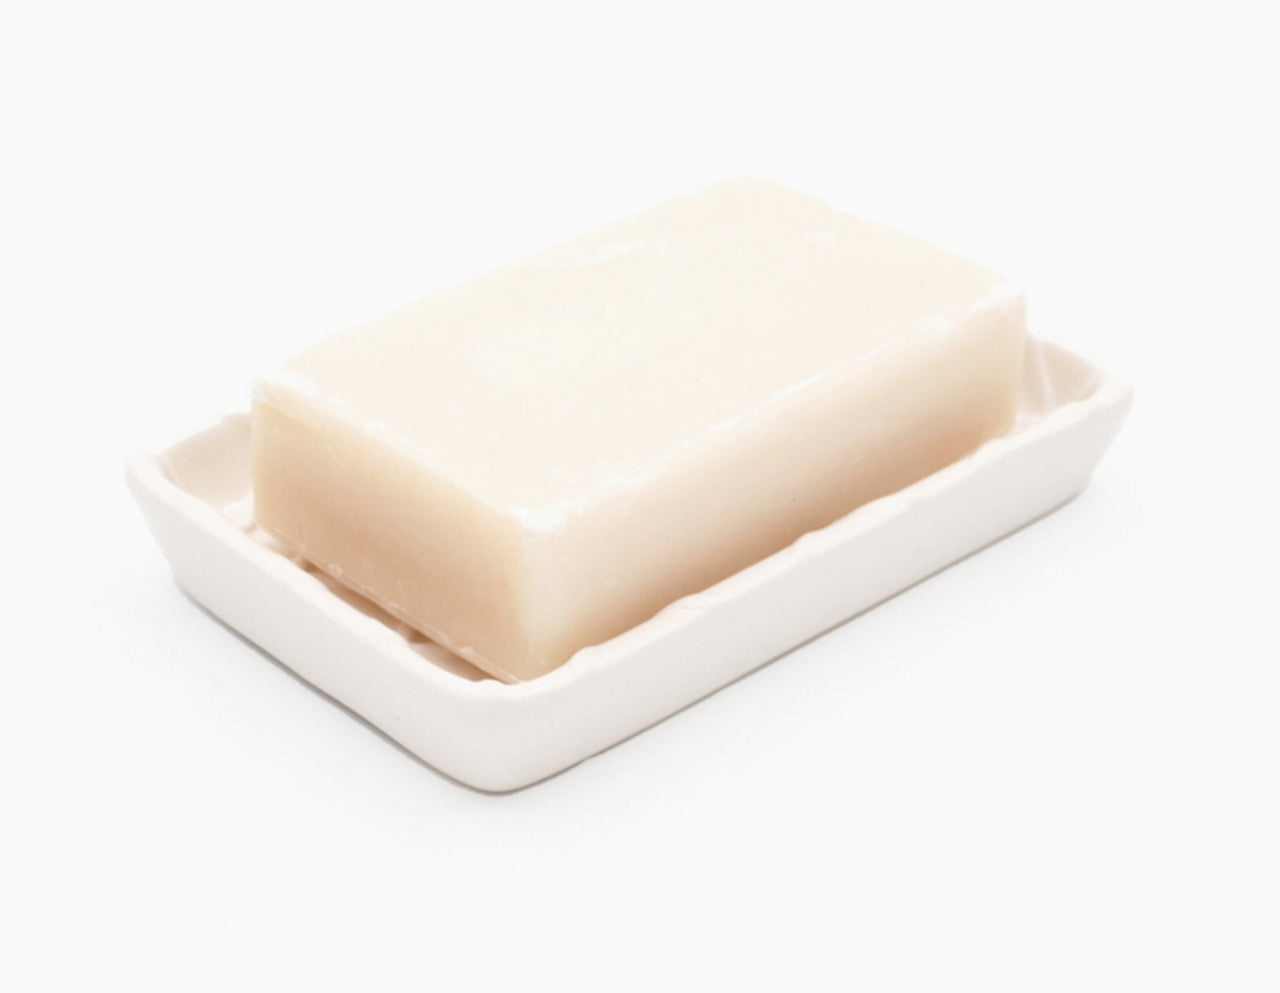 Textured Soap Dish - White